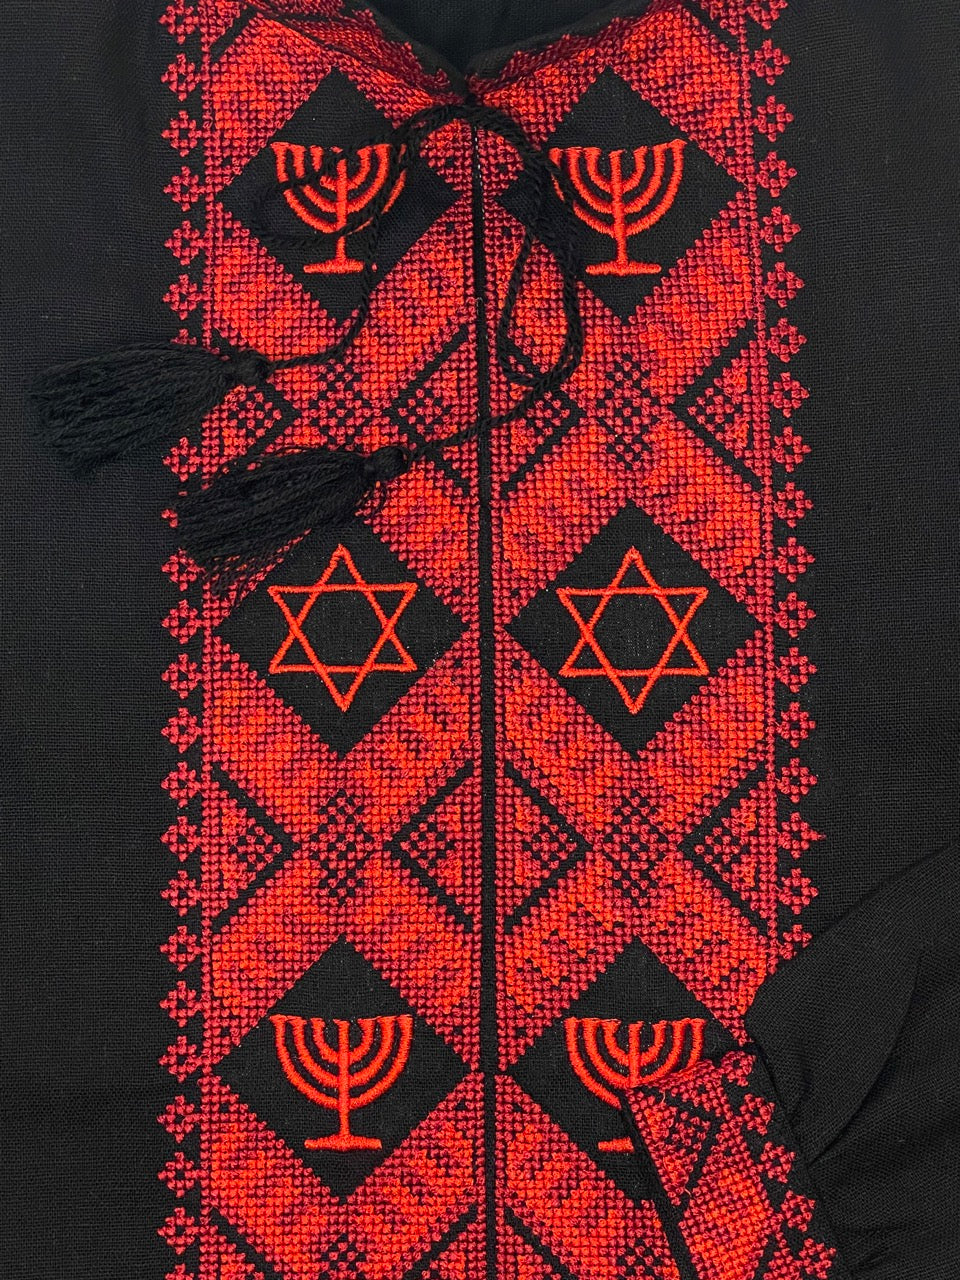 Black Men's Embroidered Shirt with Jewish Symbols